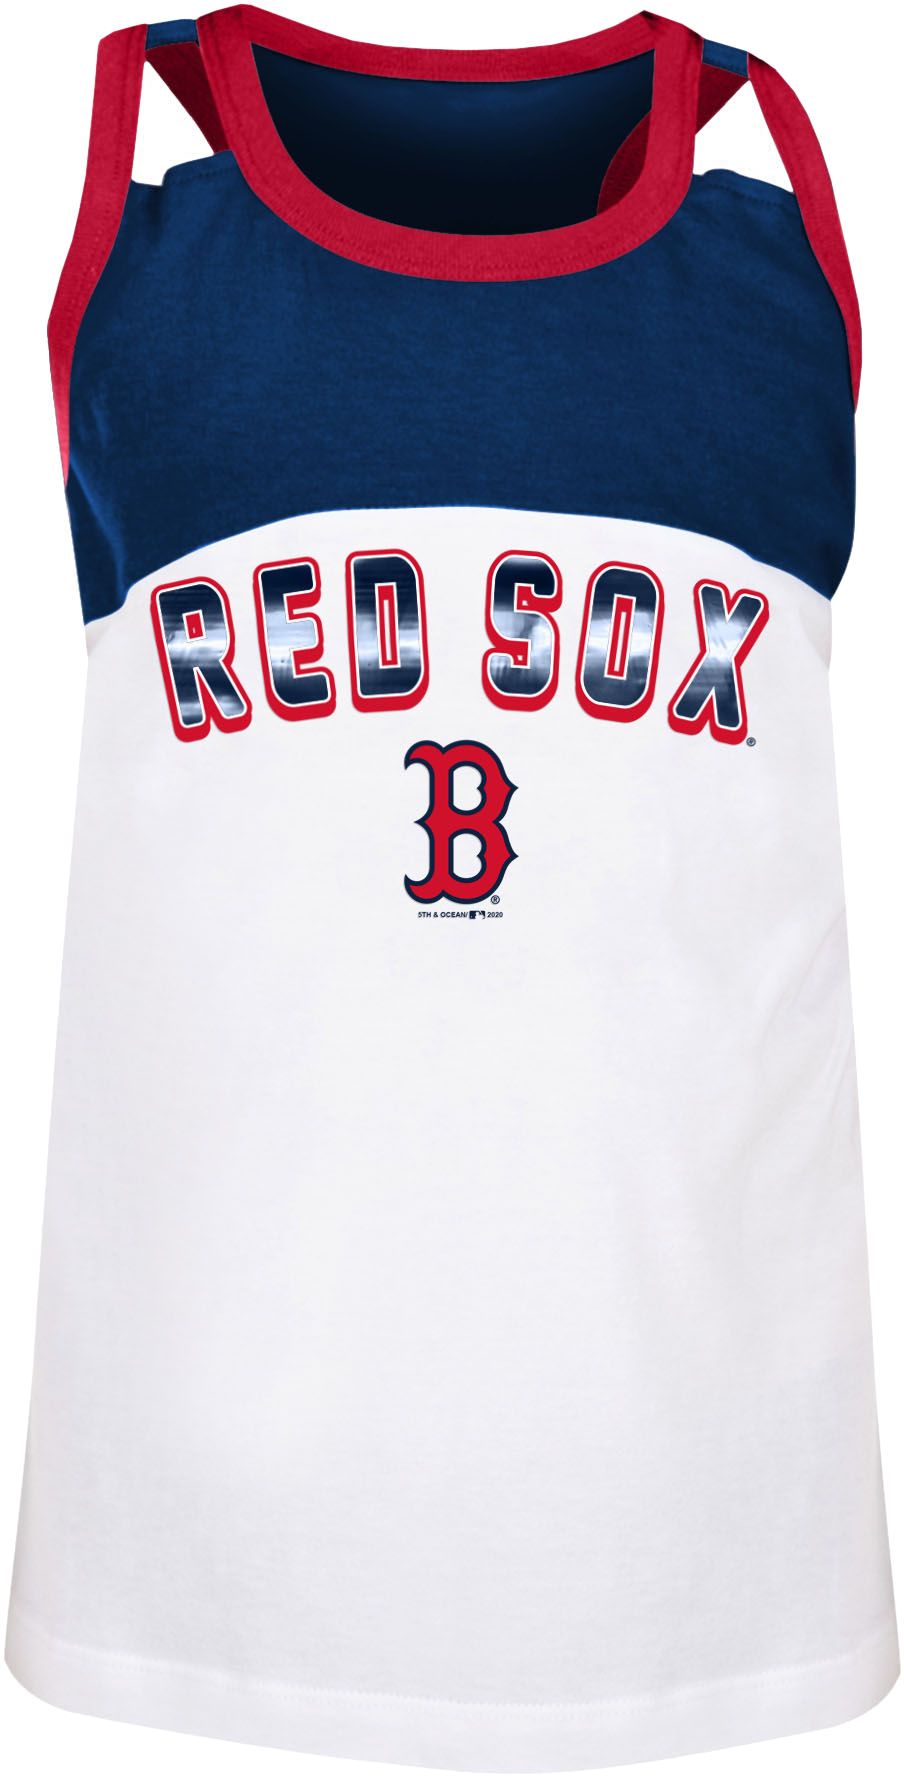 New Era / Youth Girls' Boston Red Sox Navy Spandex Baby Jersey